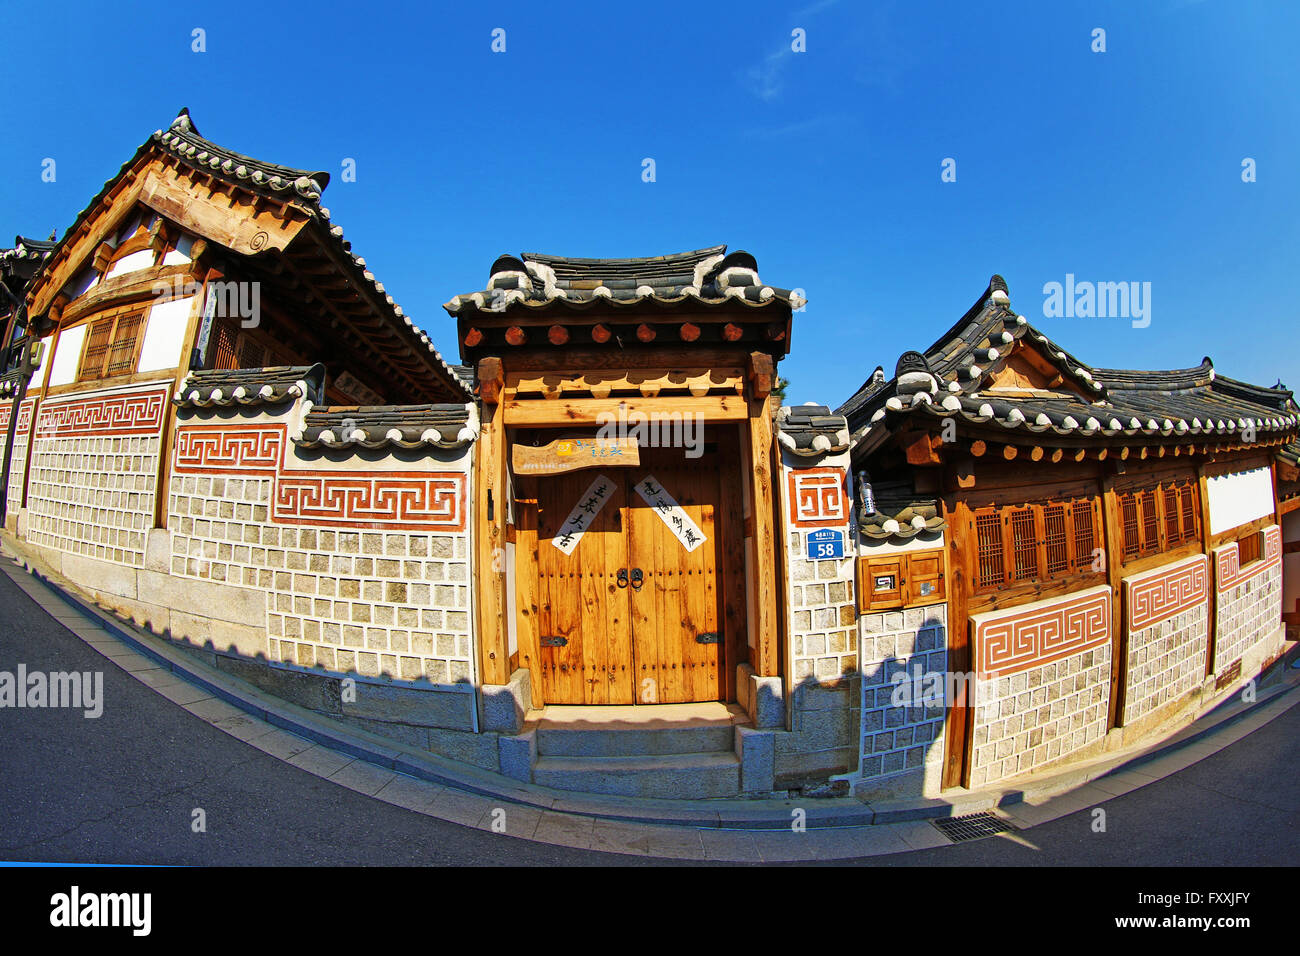 Street scene in the old town of Bukchon Hanok village in Seoul, Korea Stock Photo